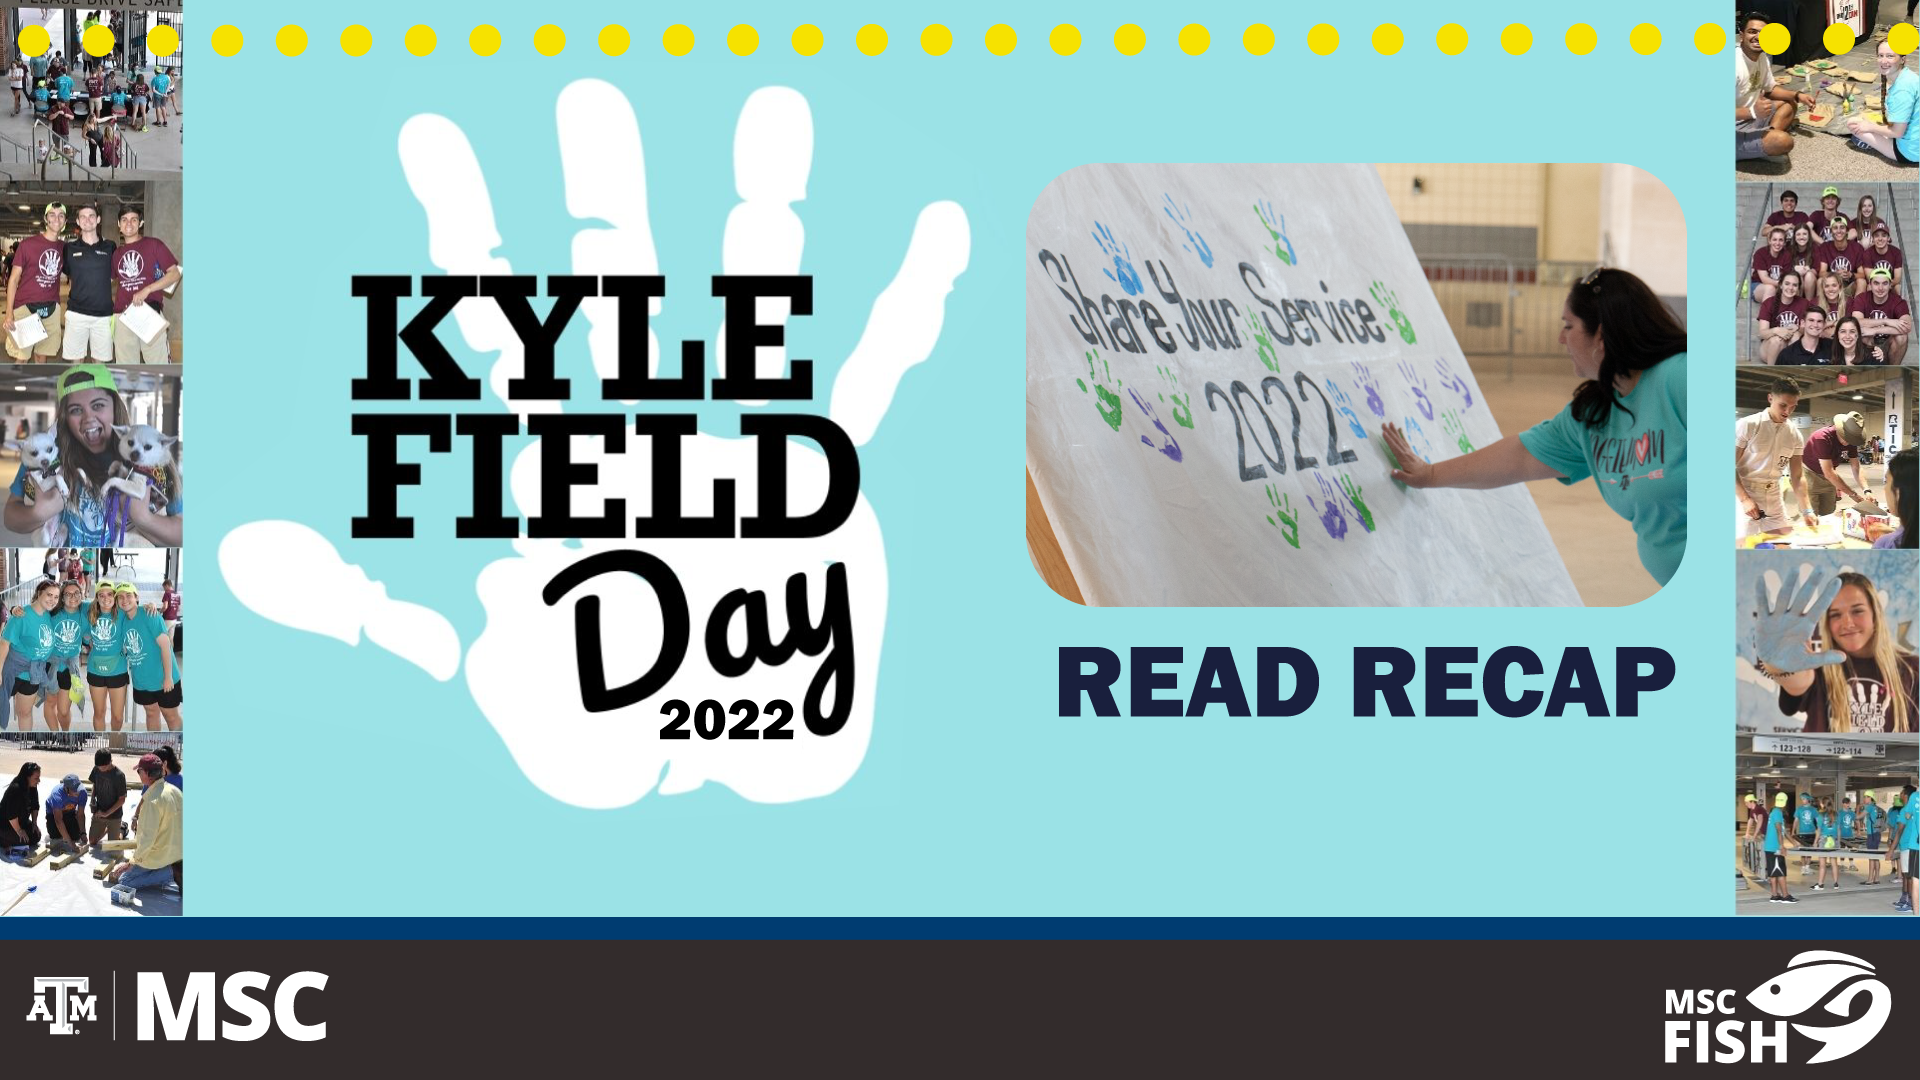 MSC FISH Presents Kyle Field Day 2022, Read Recap